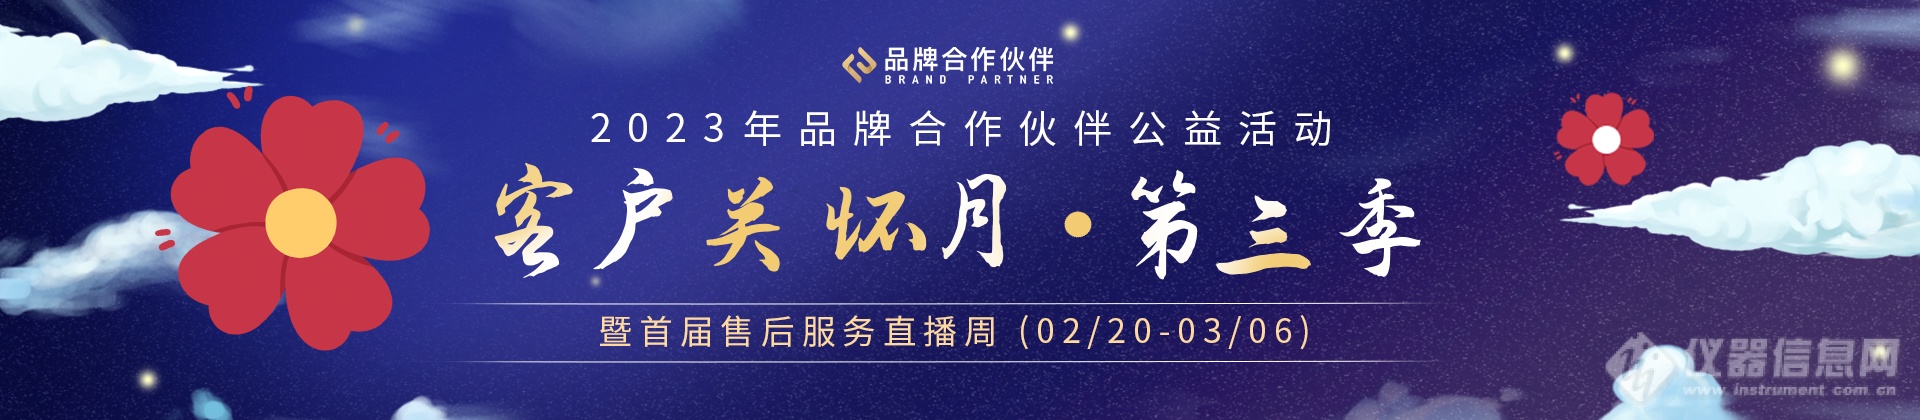 S3-客户关怀月-banner-logo-zhibo.png